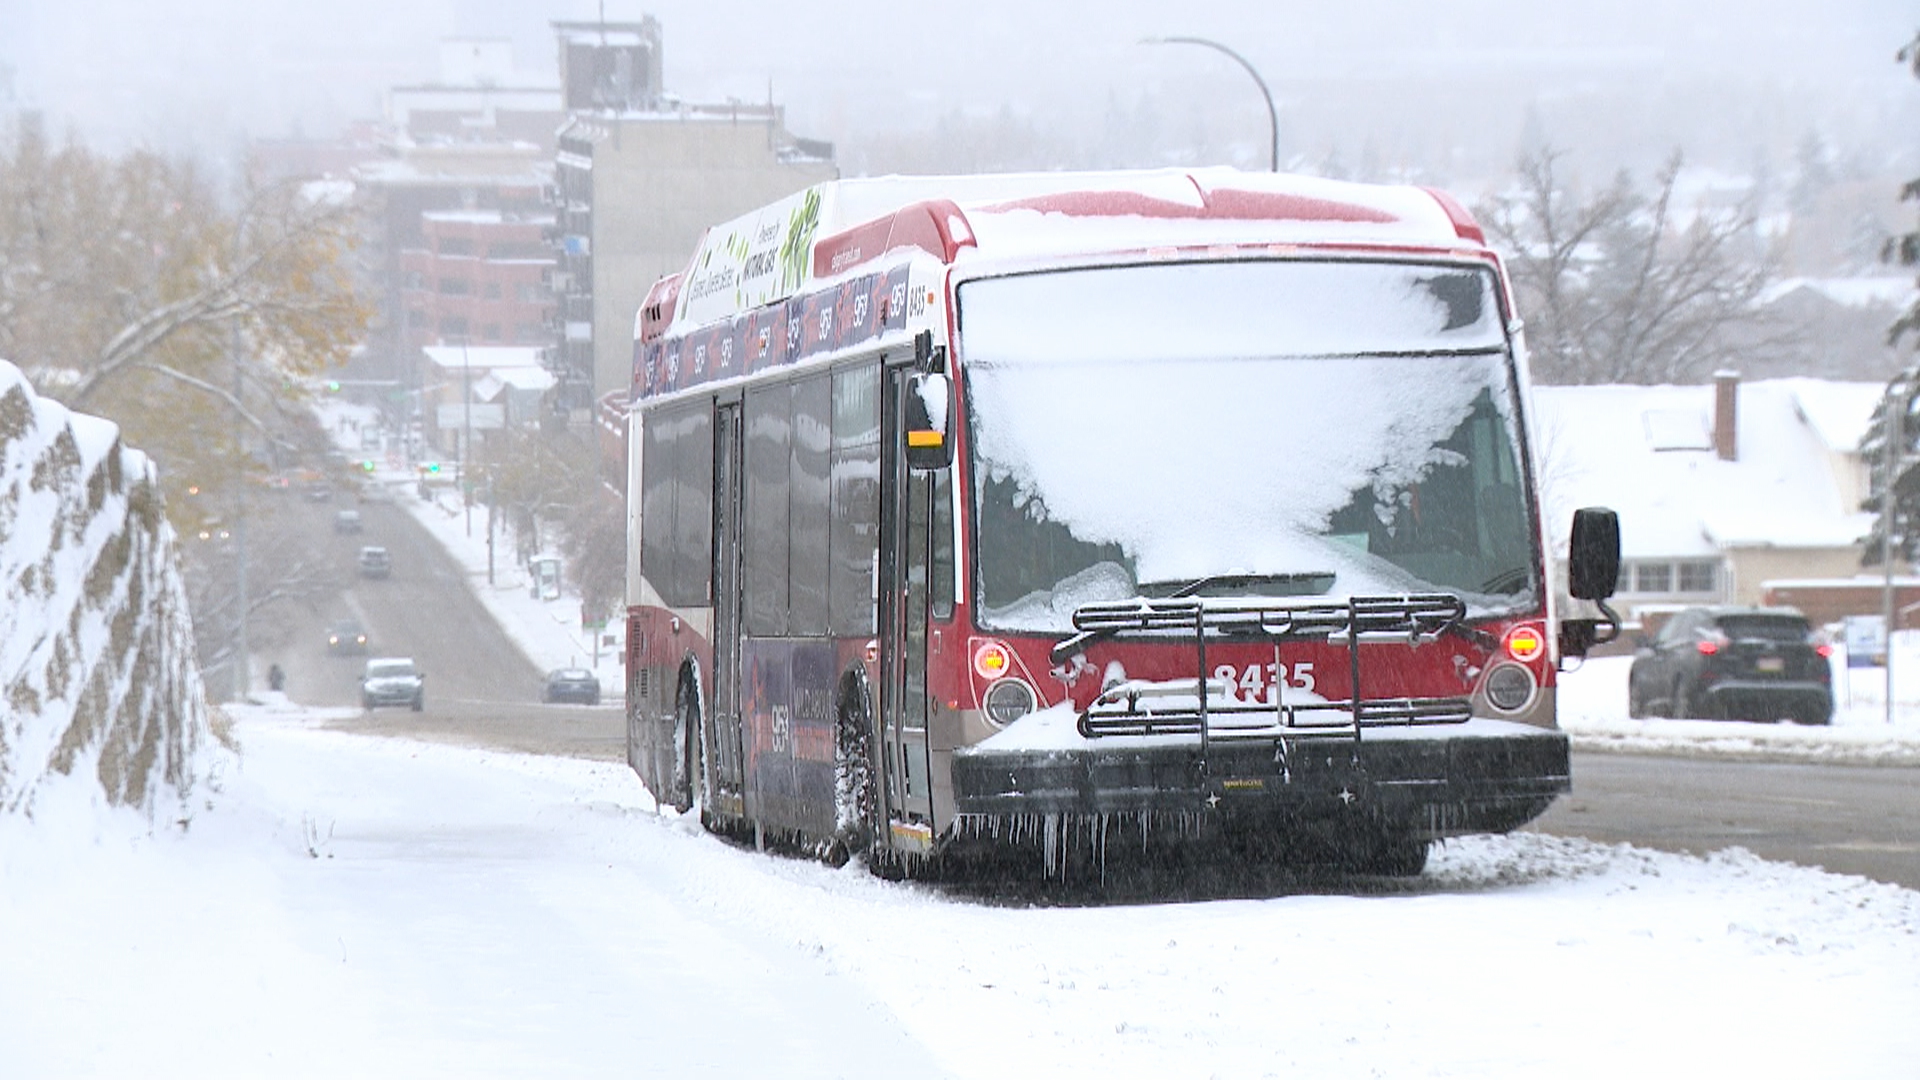 Calgary Transit declares snow detours ahead of expected heavy snowfall